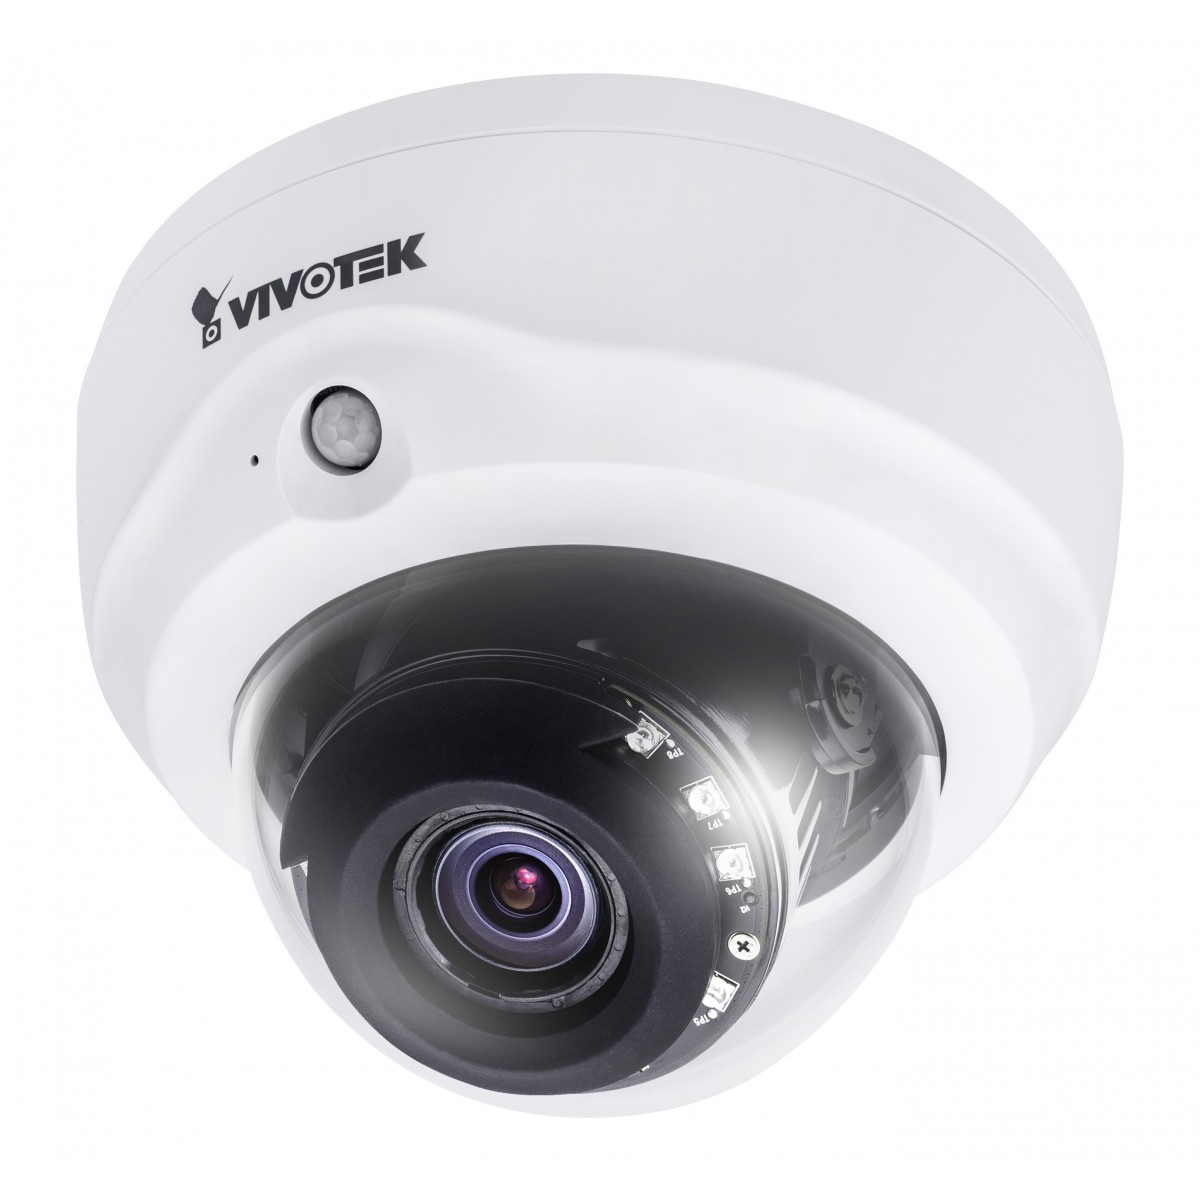 VIVOTEK FD9181-HT - IP security camera - Outdoor - CE - LVD - FCC Class B - VCCI - C-Tick - UL - Dome - Ceiling-Wall - White